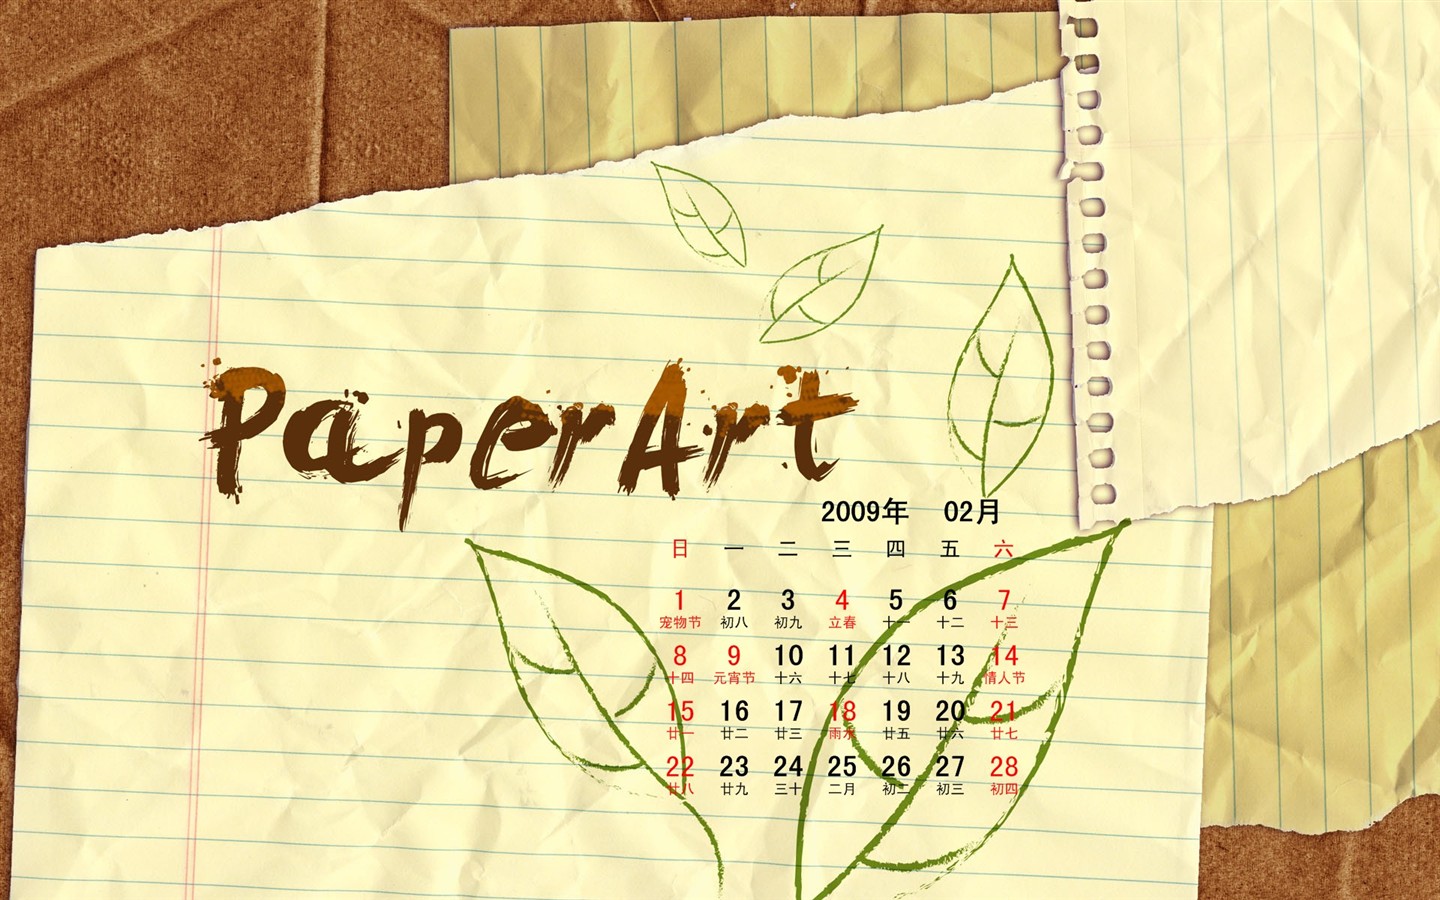 PaperArt 09 year in February calendar wallpaper #27 - 1440x900